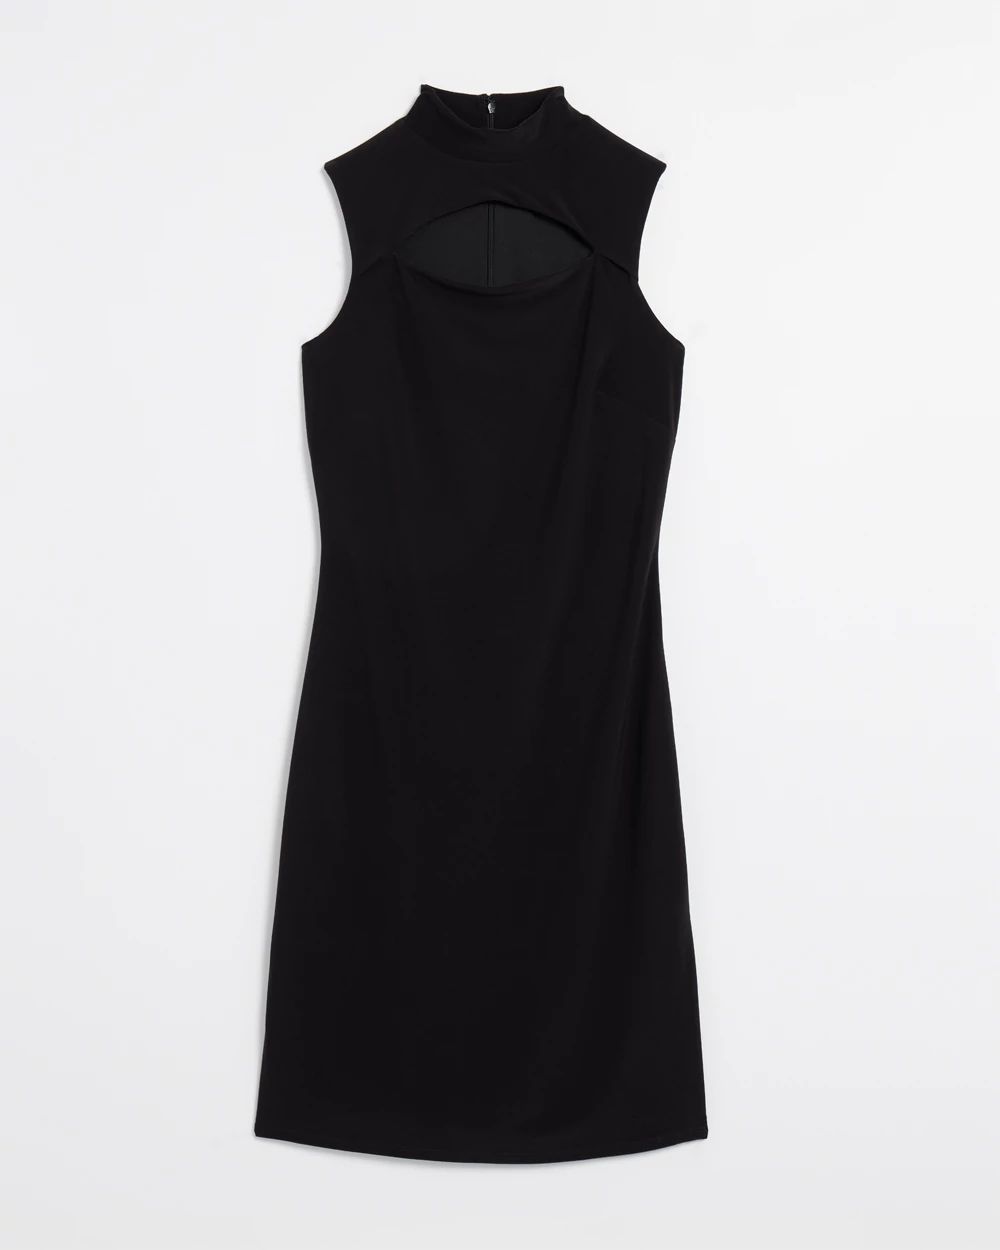 Petite Sleeveless Mockneck Cutout Matte Jersey Midi Dress click to view larger image.